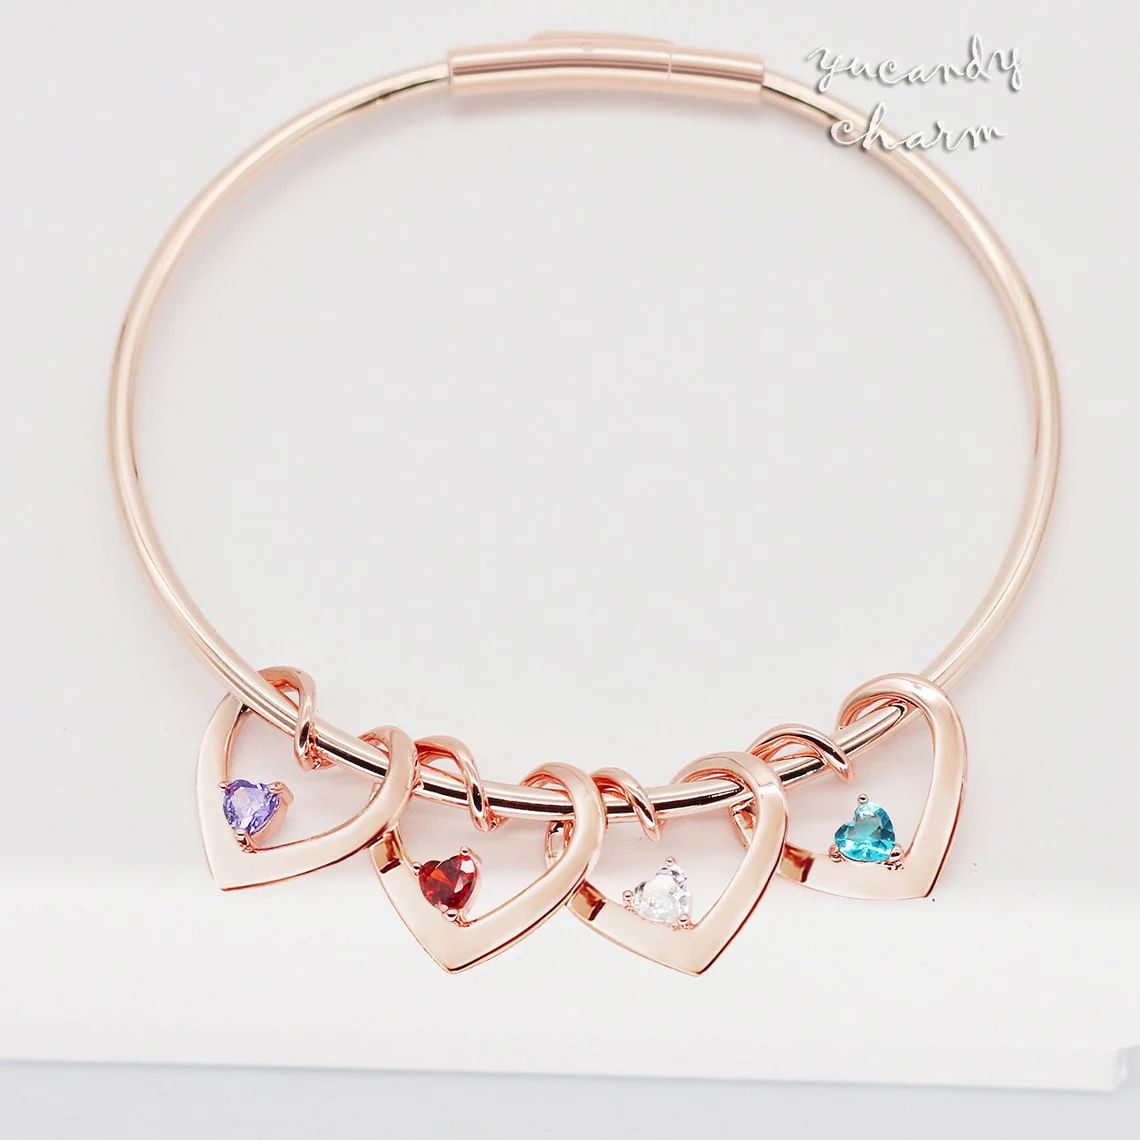 Custom Name&Birthstone Family Bangle Bracelet with Heart Shape Pendants